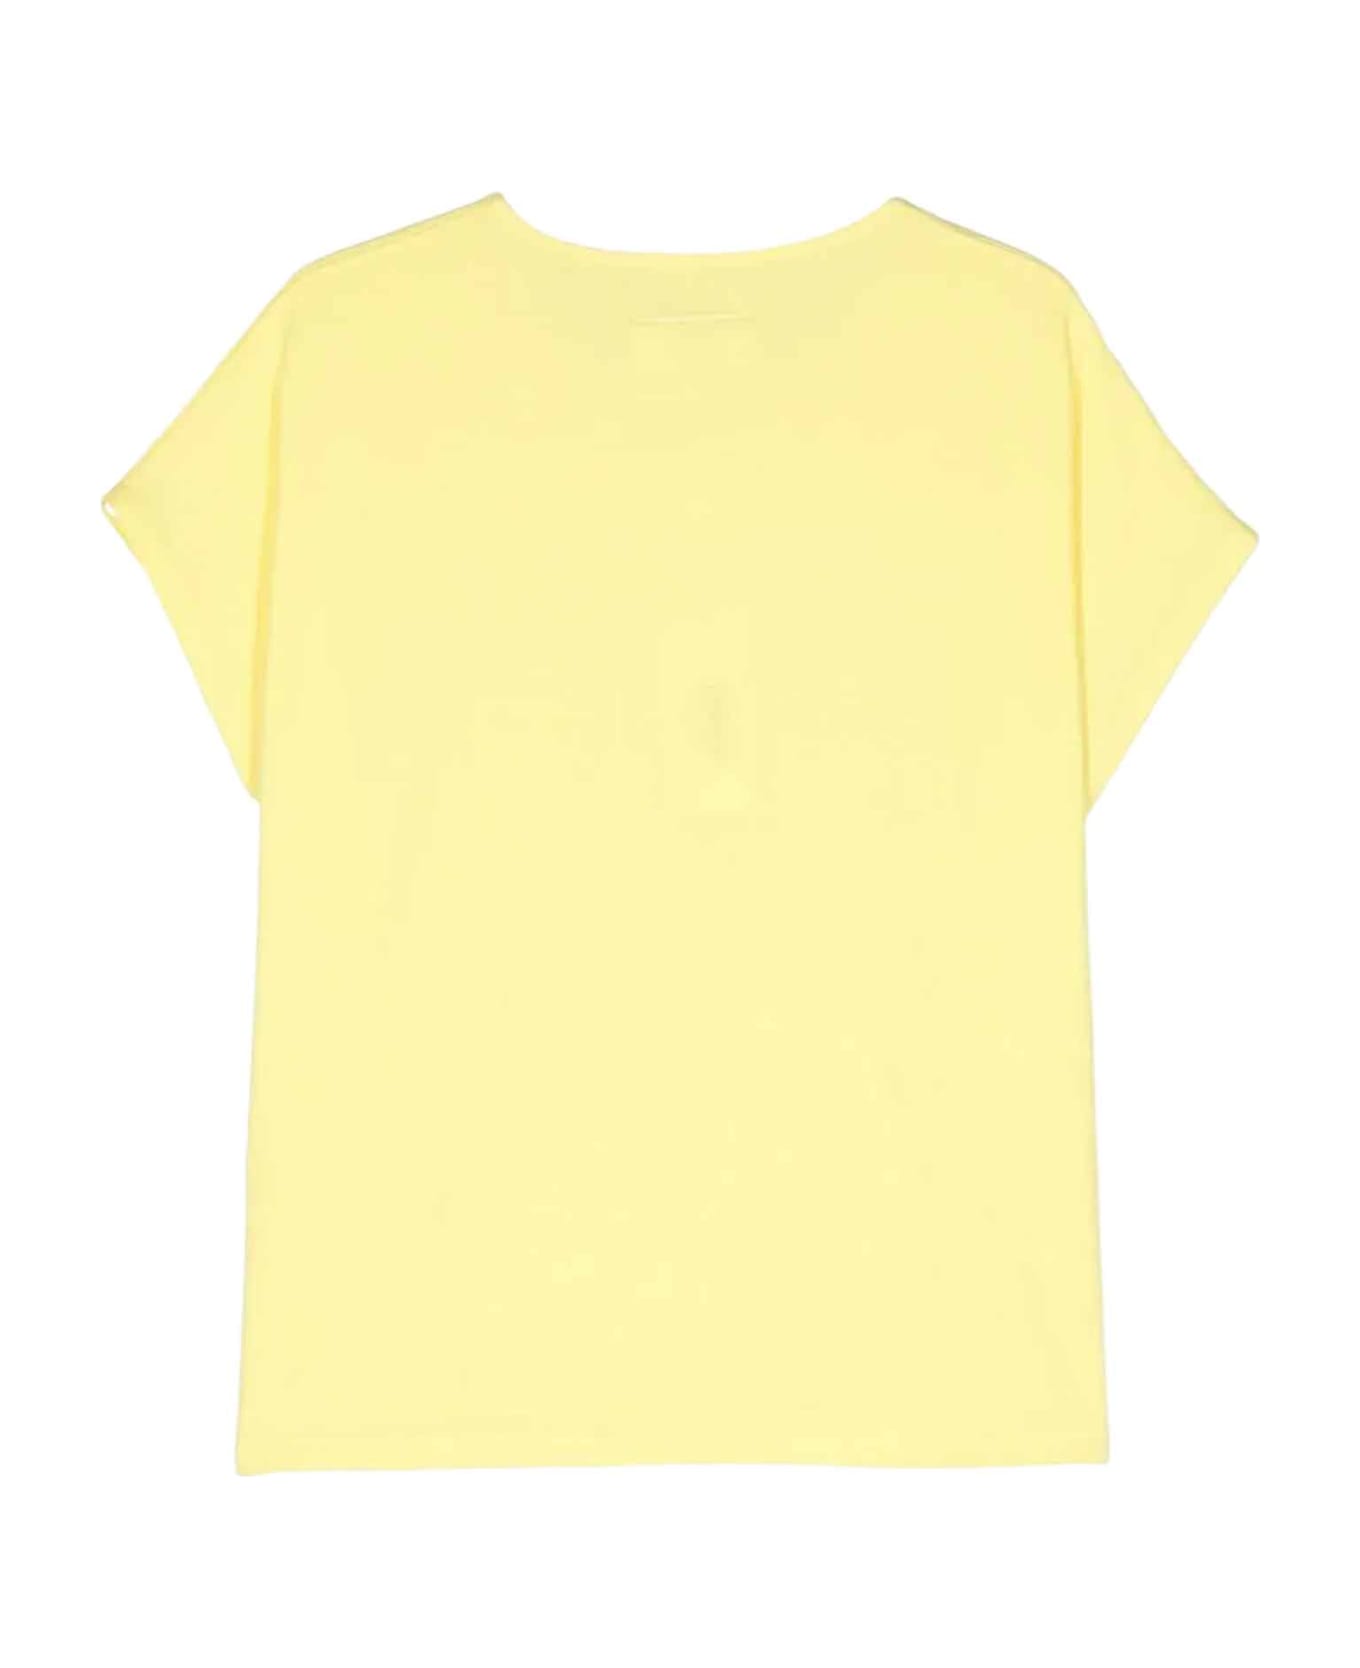 MM6 Maison Margiela Yellow T-shirt Unisex - Giallo